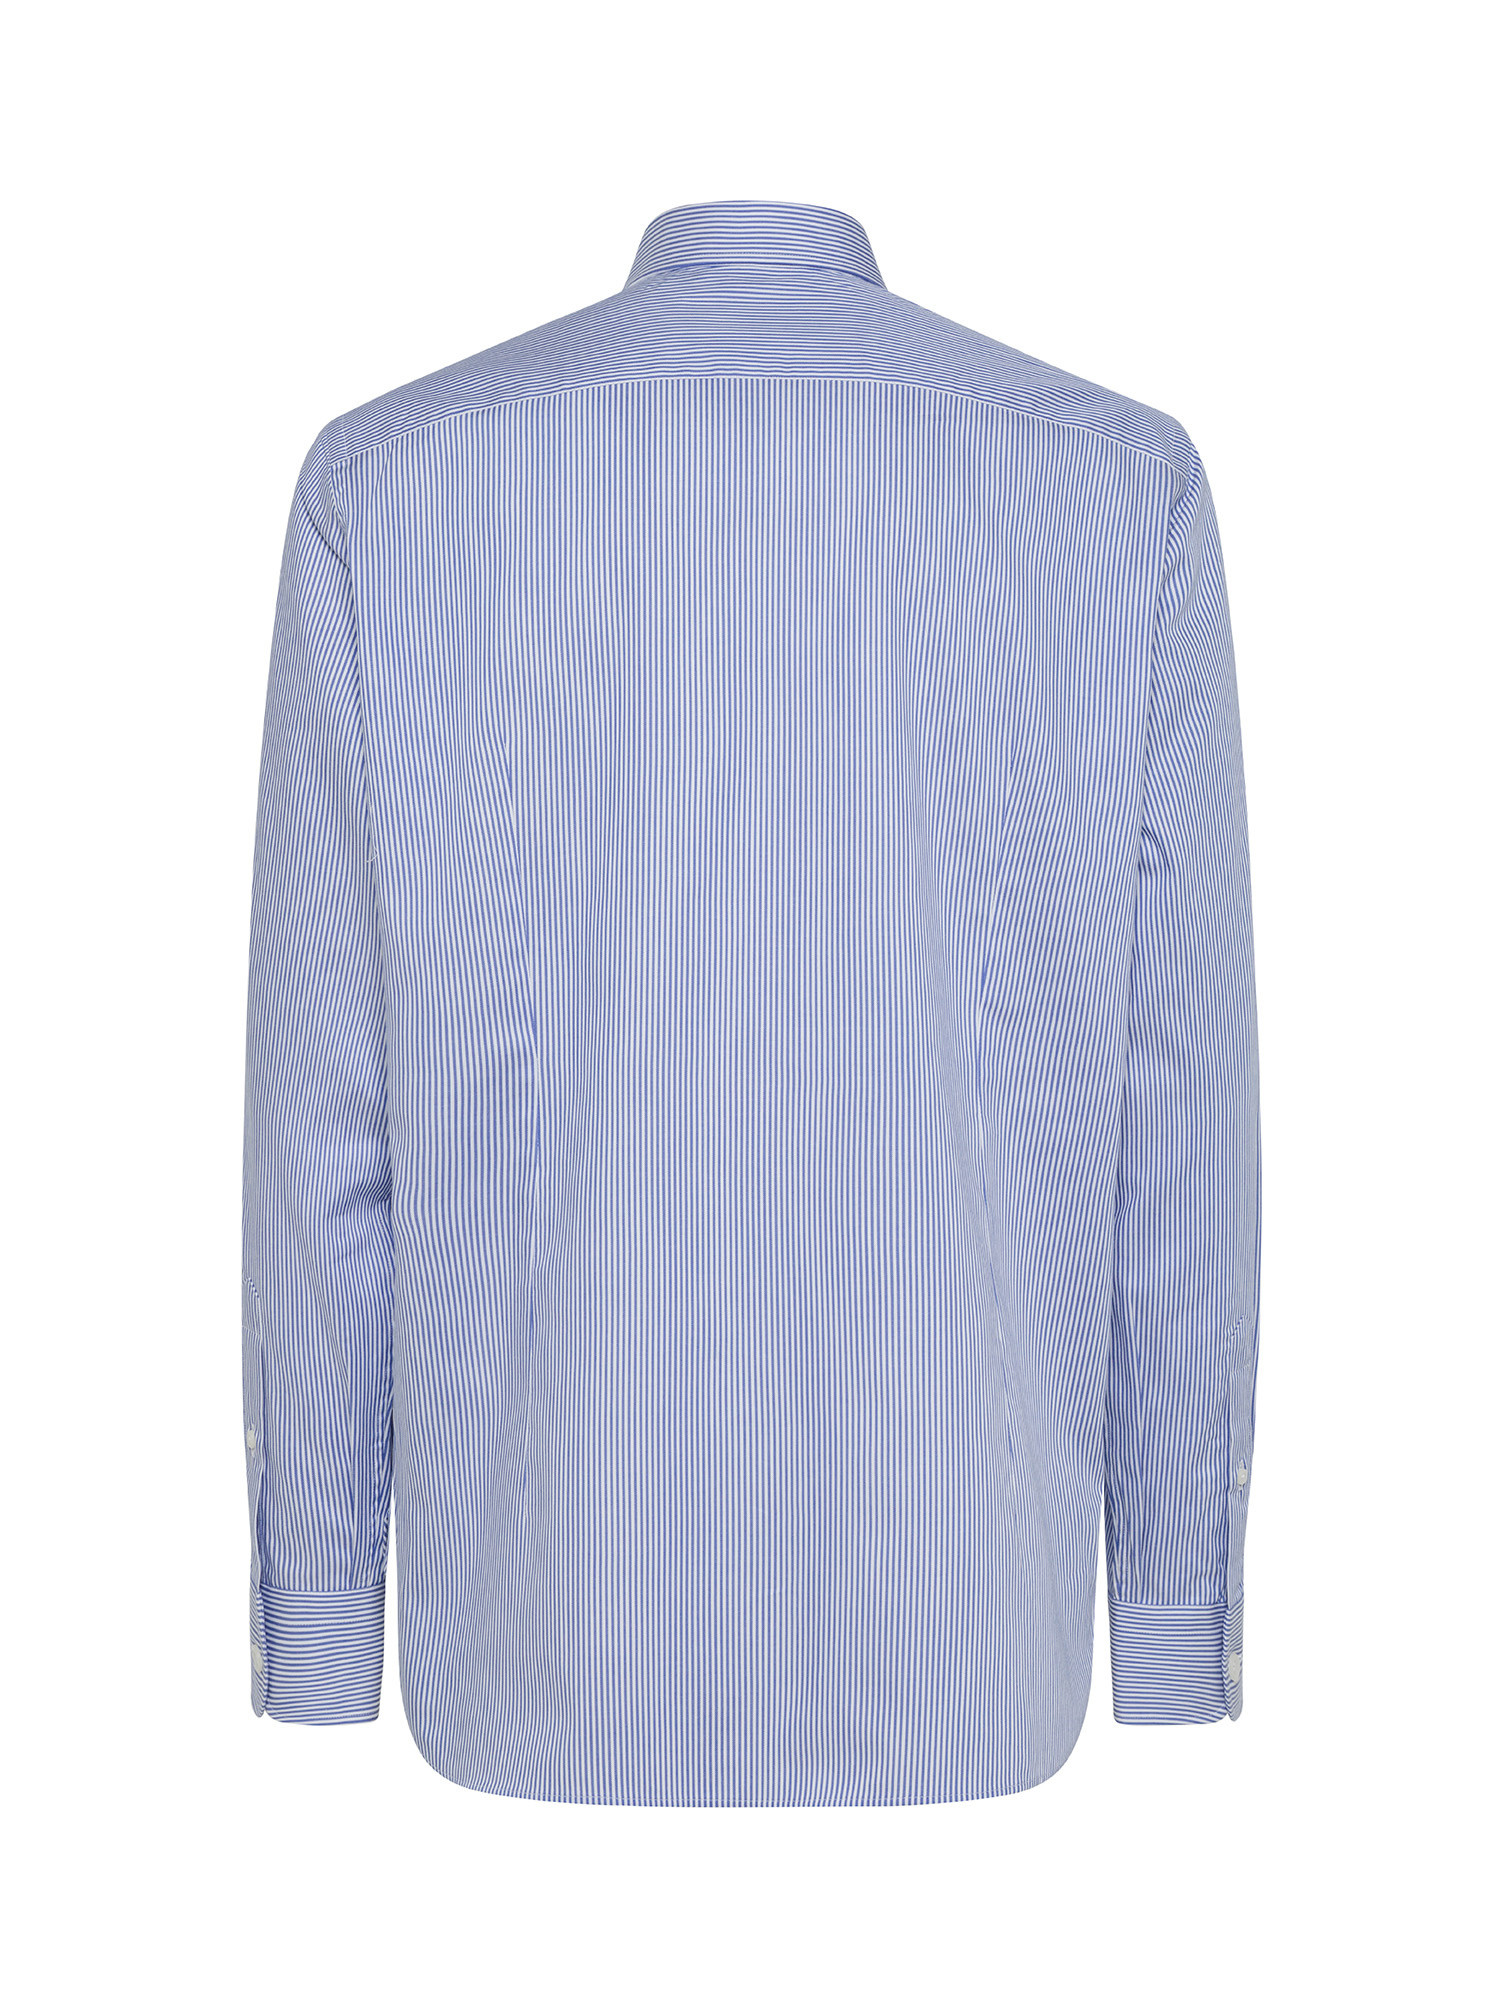 Luca D'Altieri - Camicia slim fit in puro cotone, Blu, large image number 1